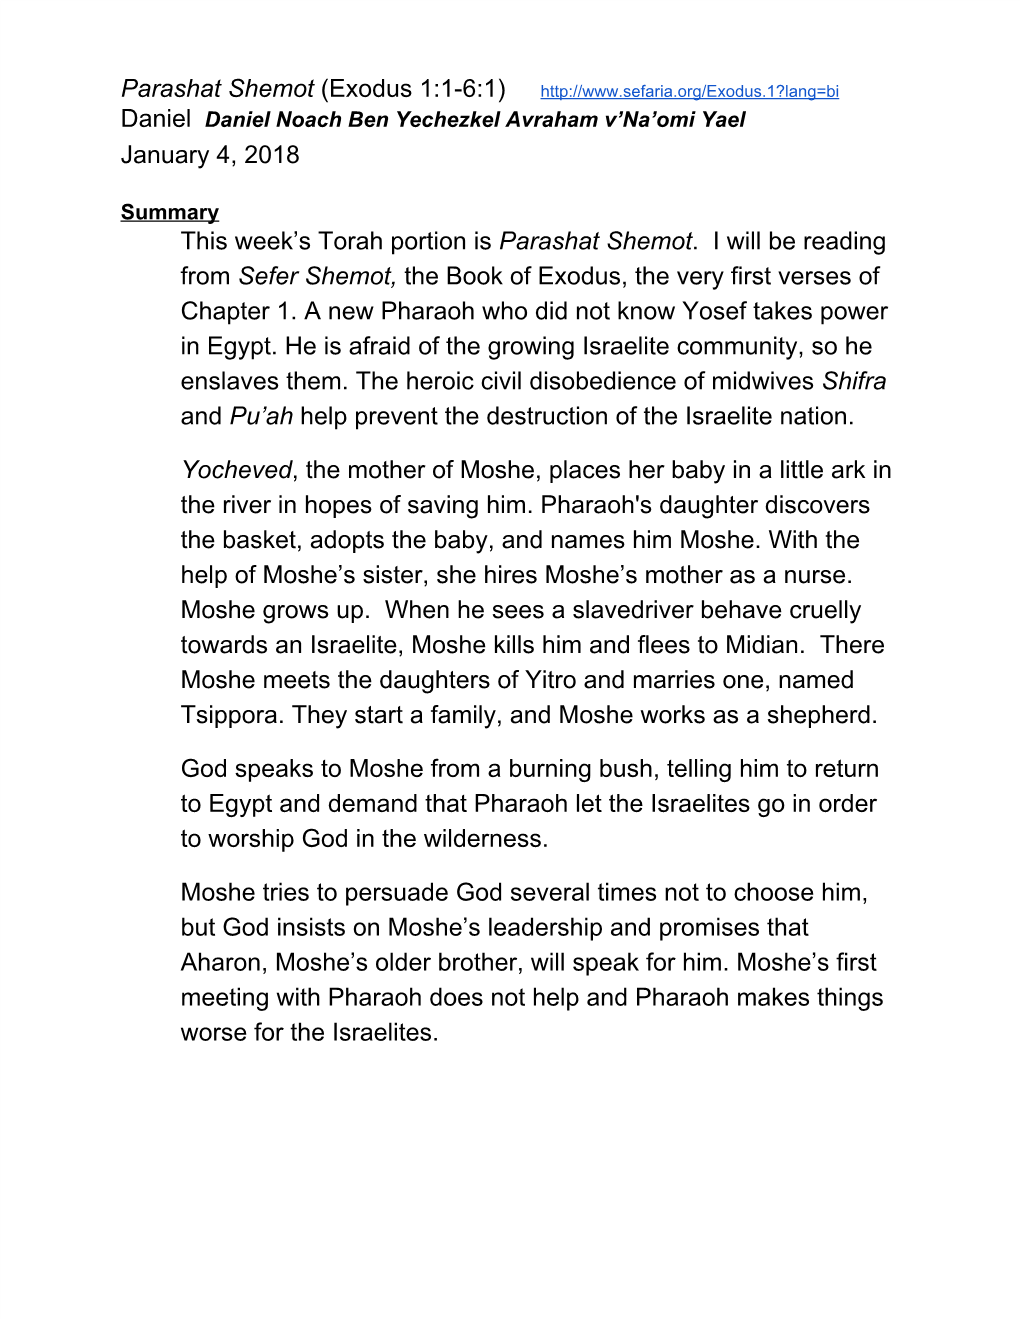 Parashat Shemot (Exodus 1:1-6:1) ​ Daniel Daniel Noach Ben Yechezkel Avraham V’Na’Omi Yael ​ ​ January 4, 2018